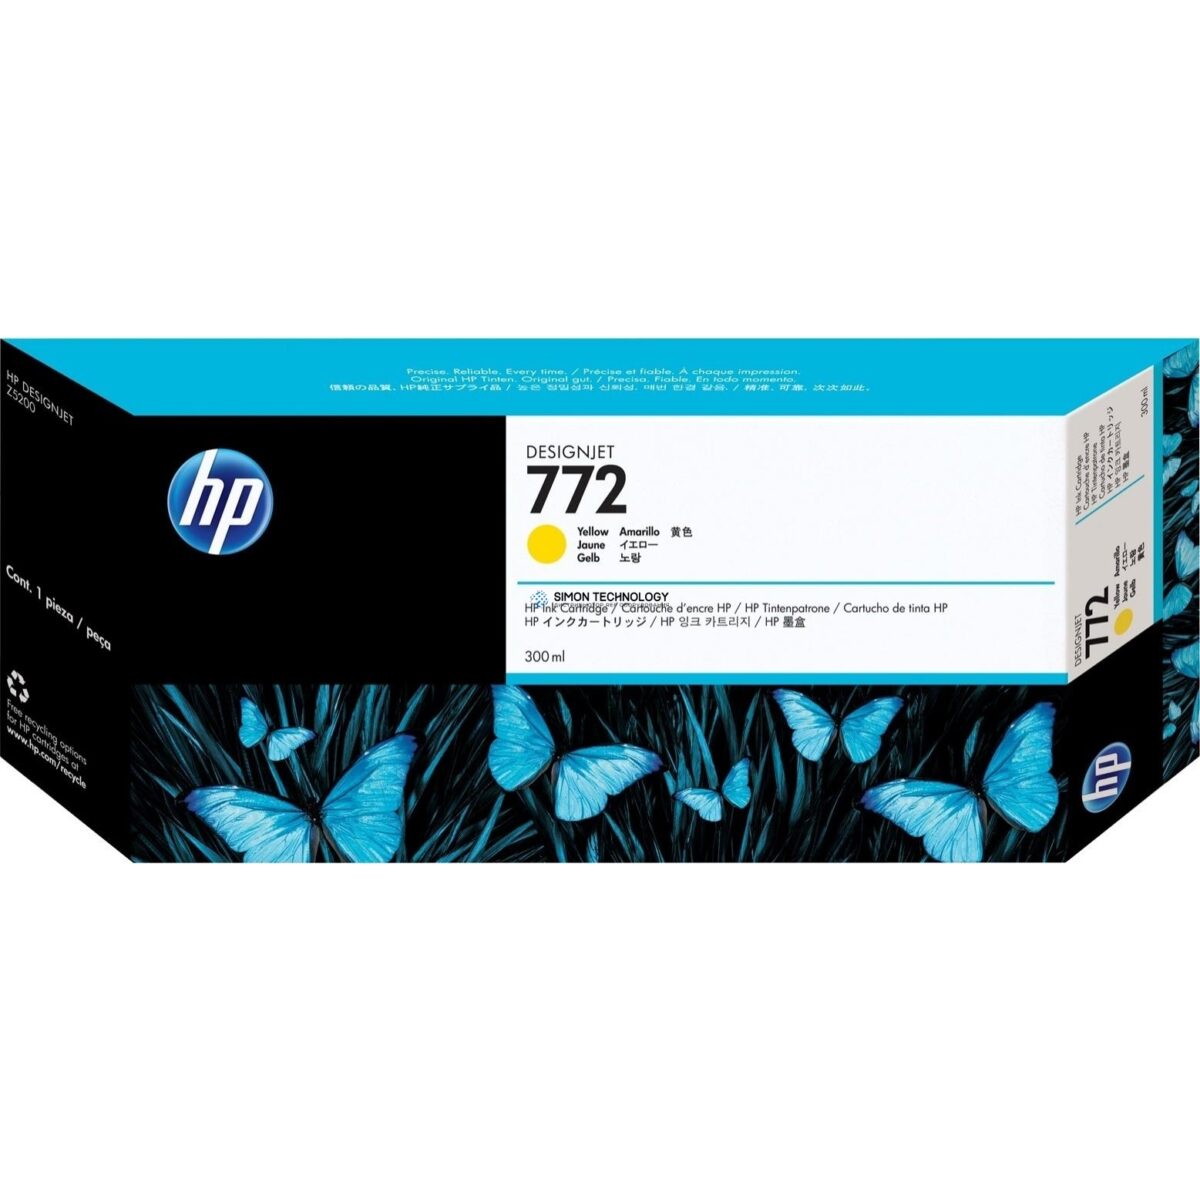 HP HP 772 300ML YELLOW DESIGNJET INK CARTRIDGE (CN630A)